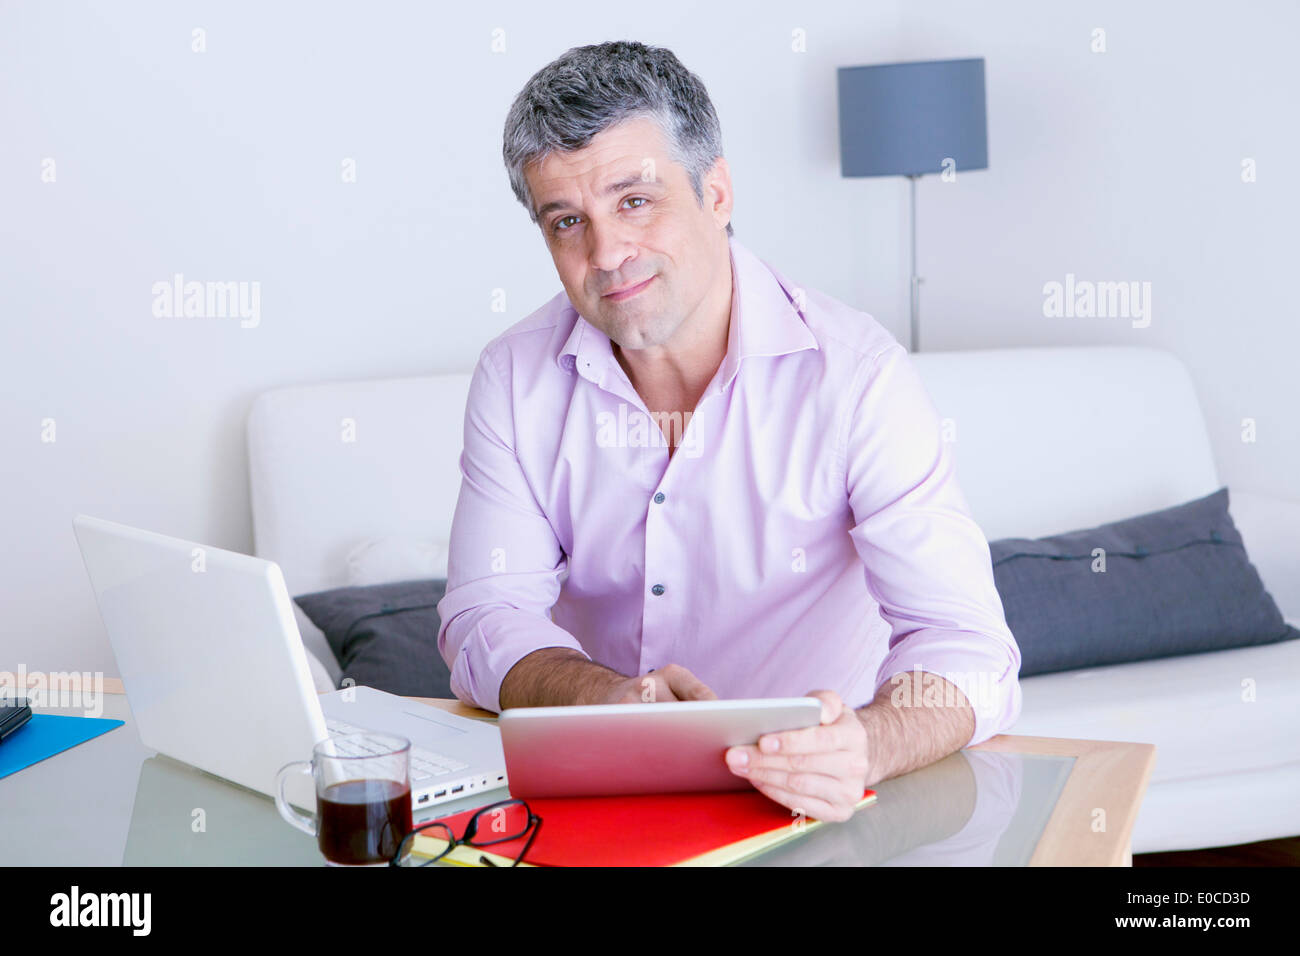 Man using a computer Stock Photo